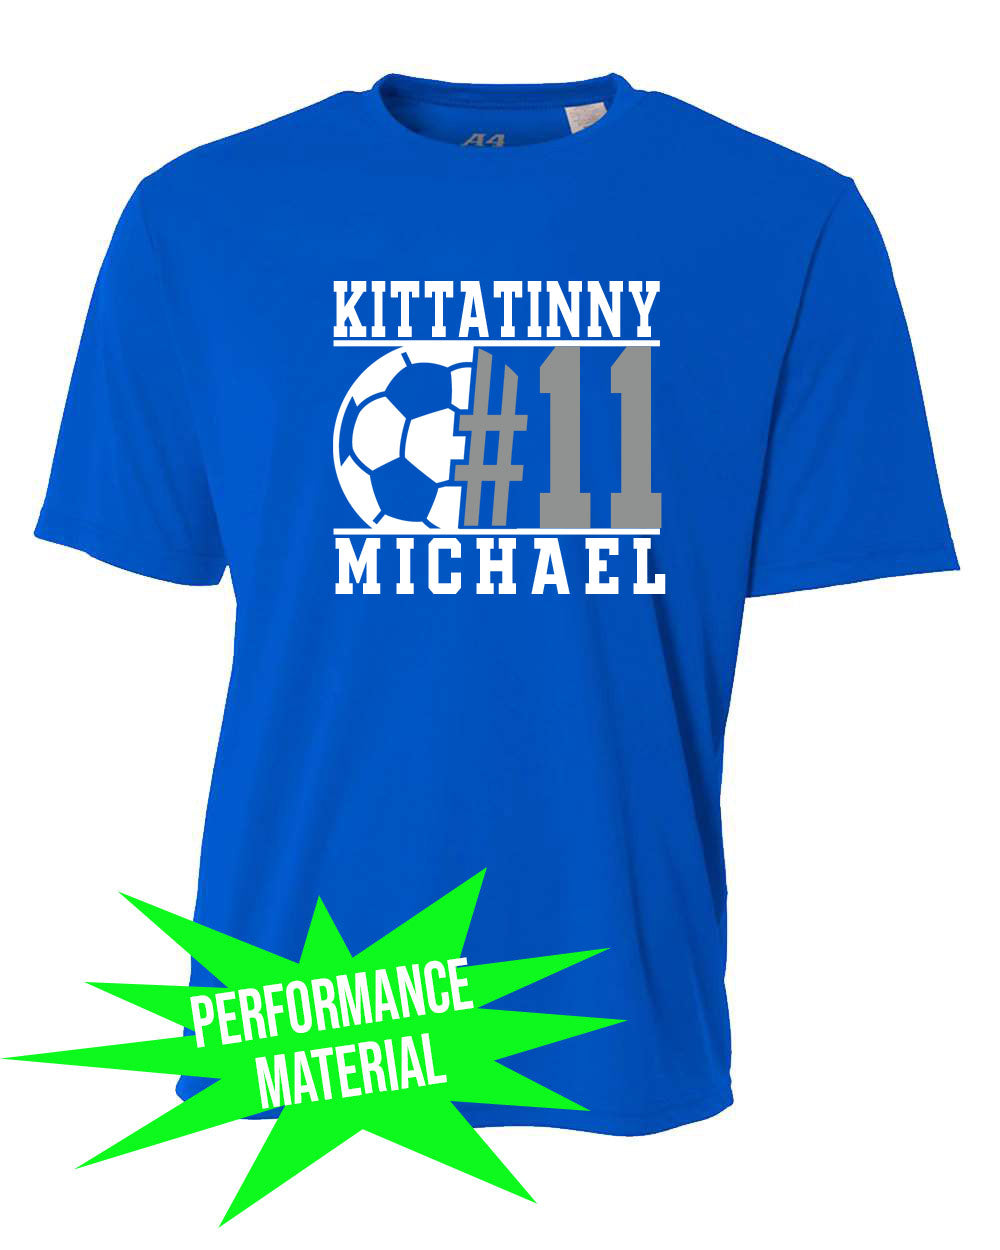 Kittatinny Soccer Performance Material T-Shirt design 5